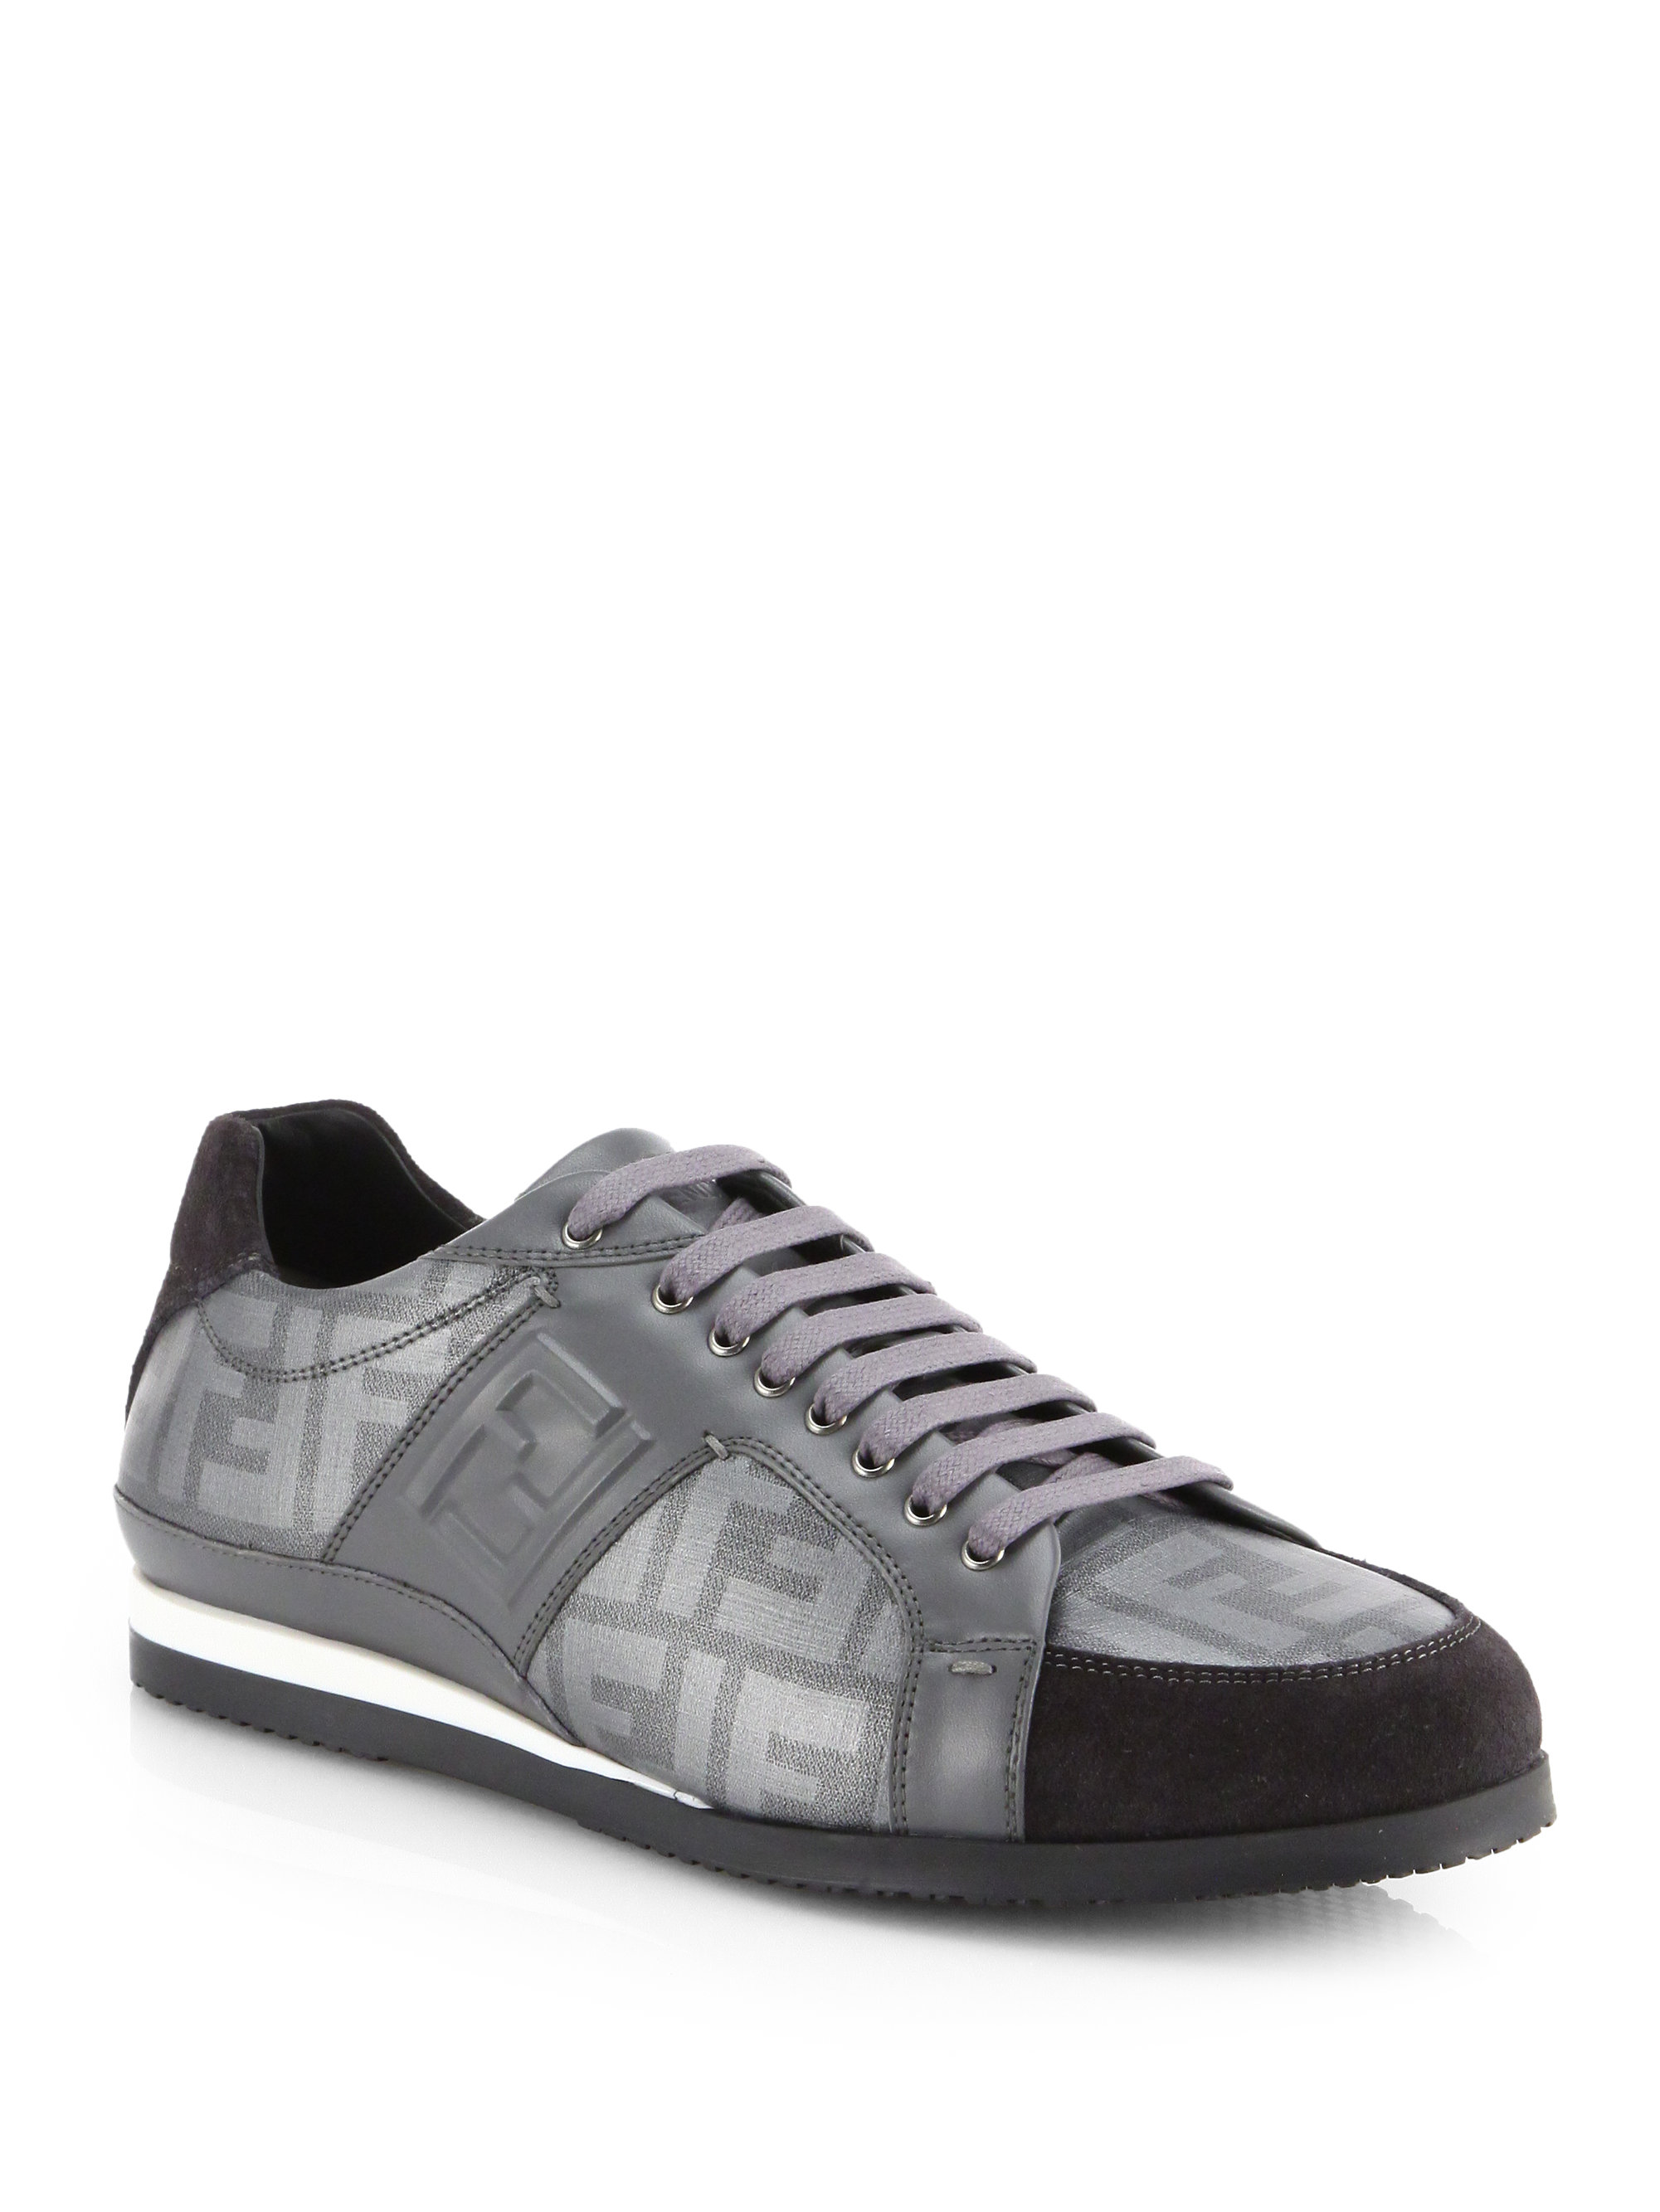 Lyst - Fendi Zucca Laceup Sneakers in Gray for Men